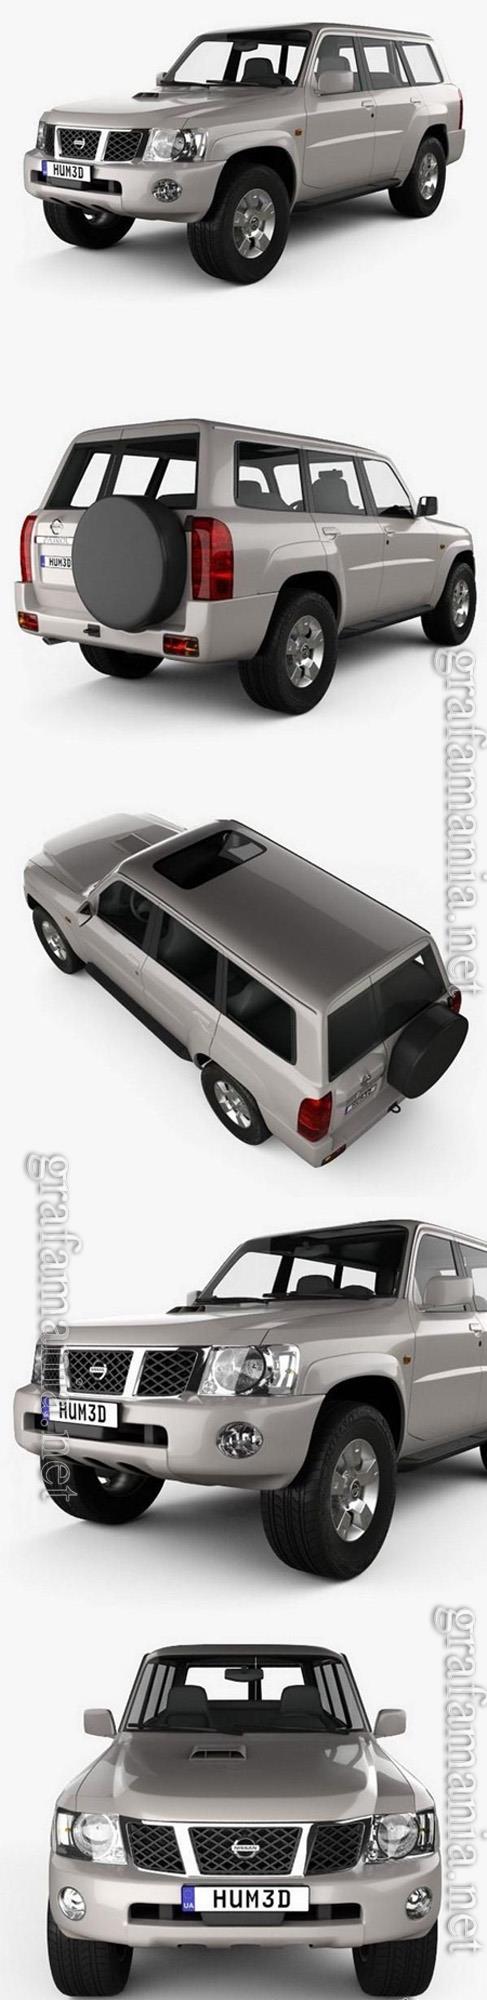 Nissan Patrol (Y61) 2004 3D Model